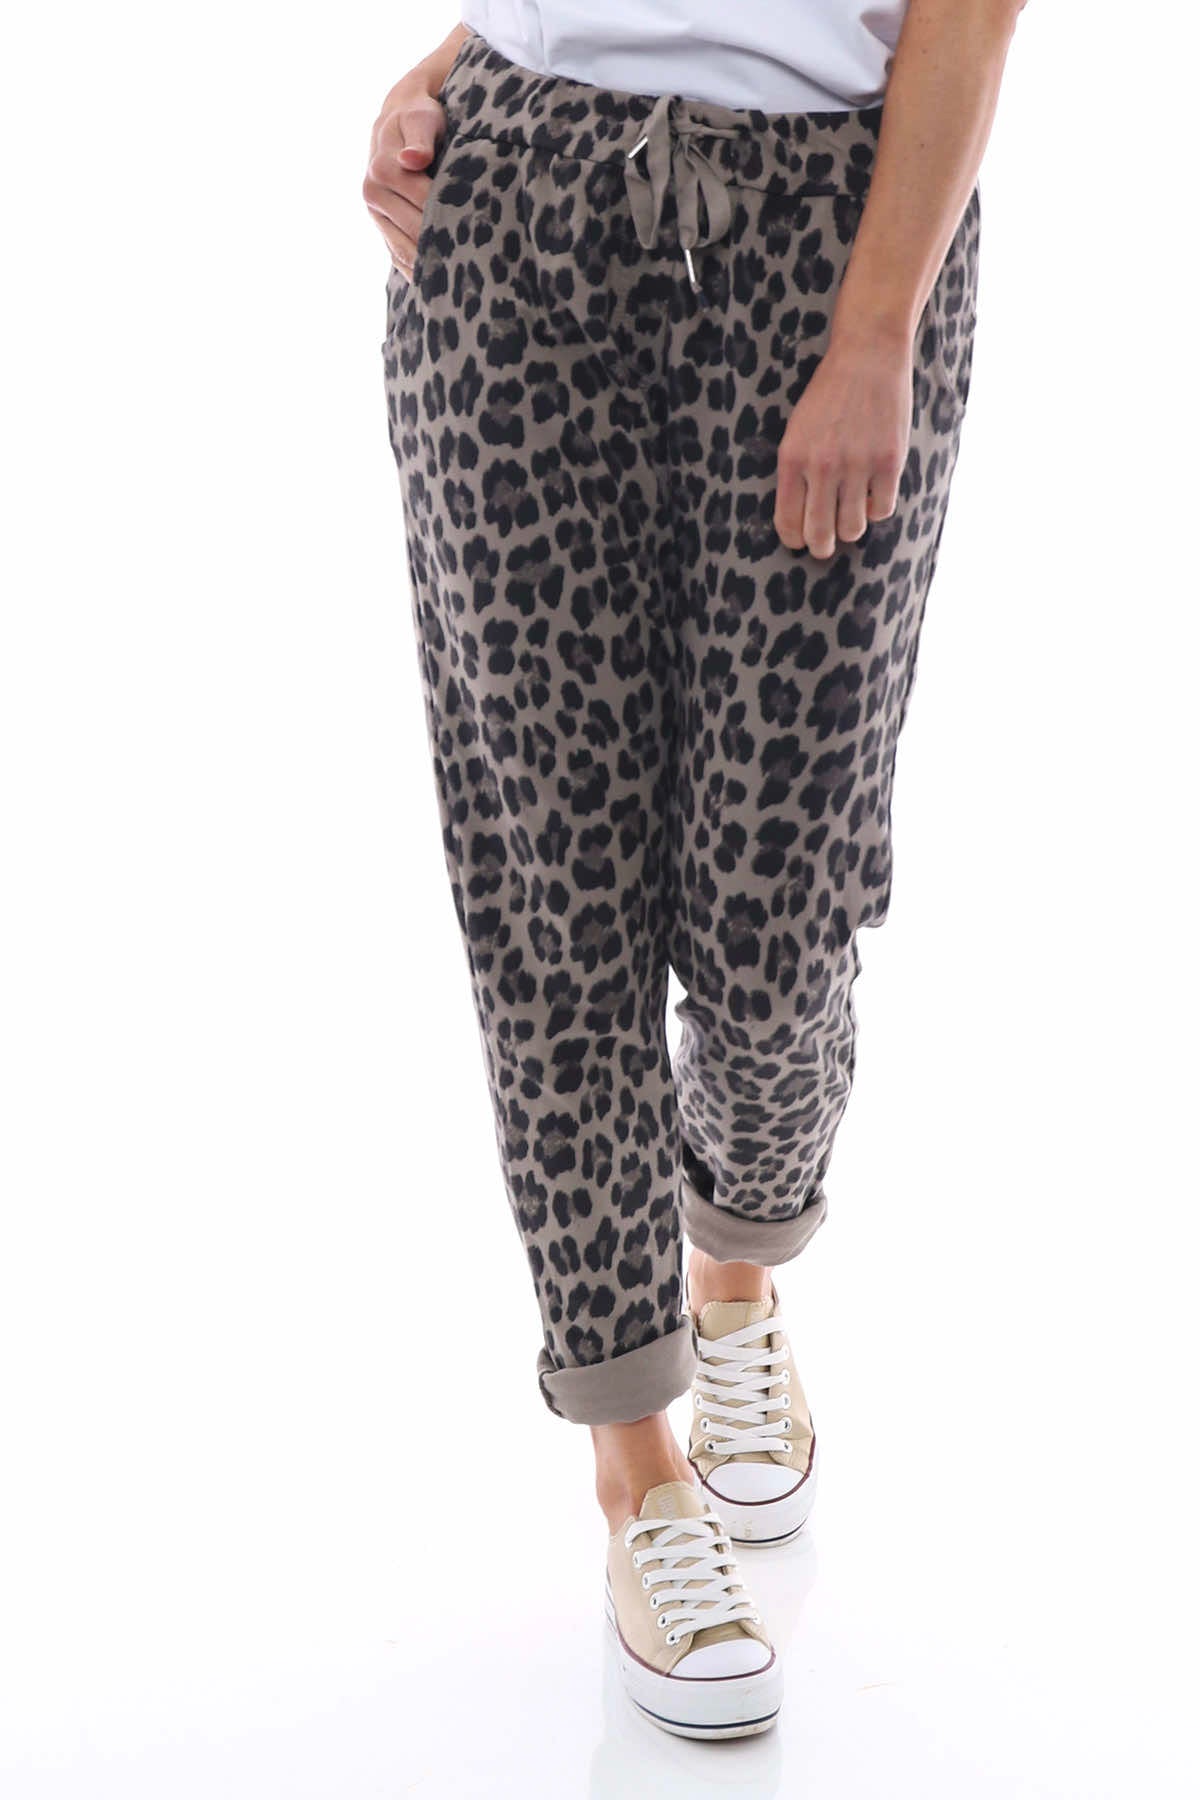 Minskip Leopard Print Jersey Pants Mocha